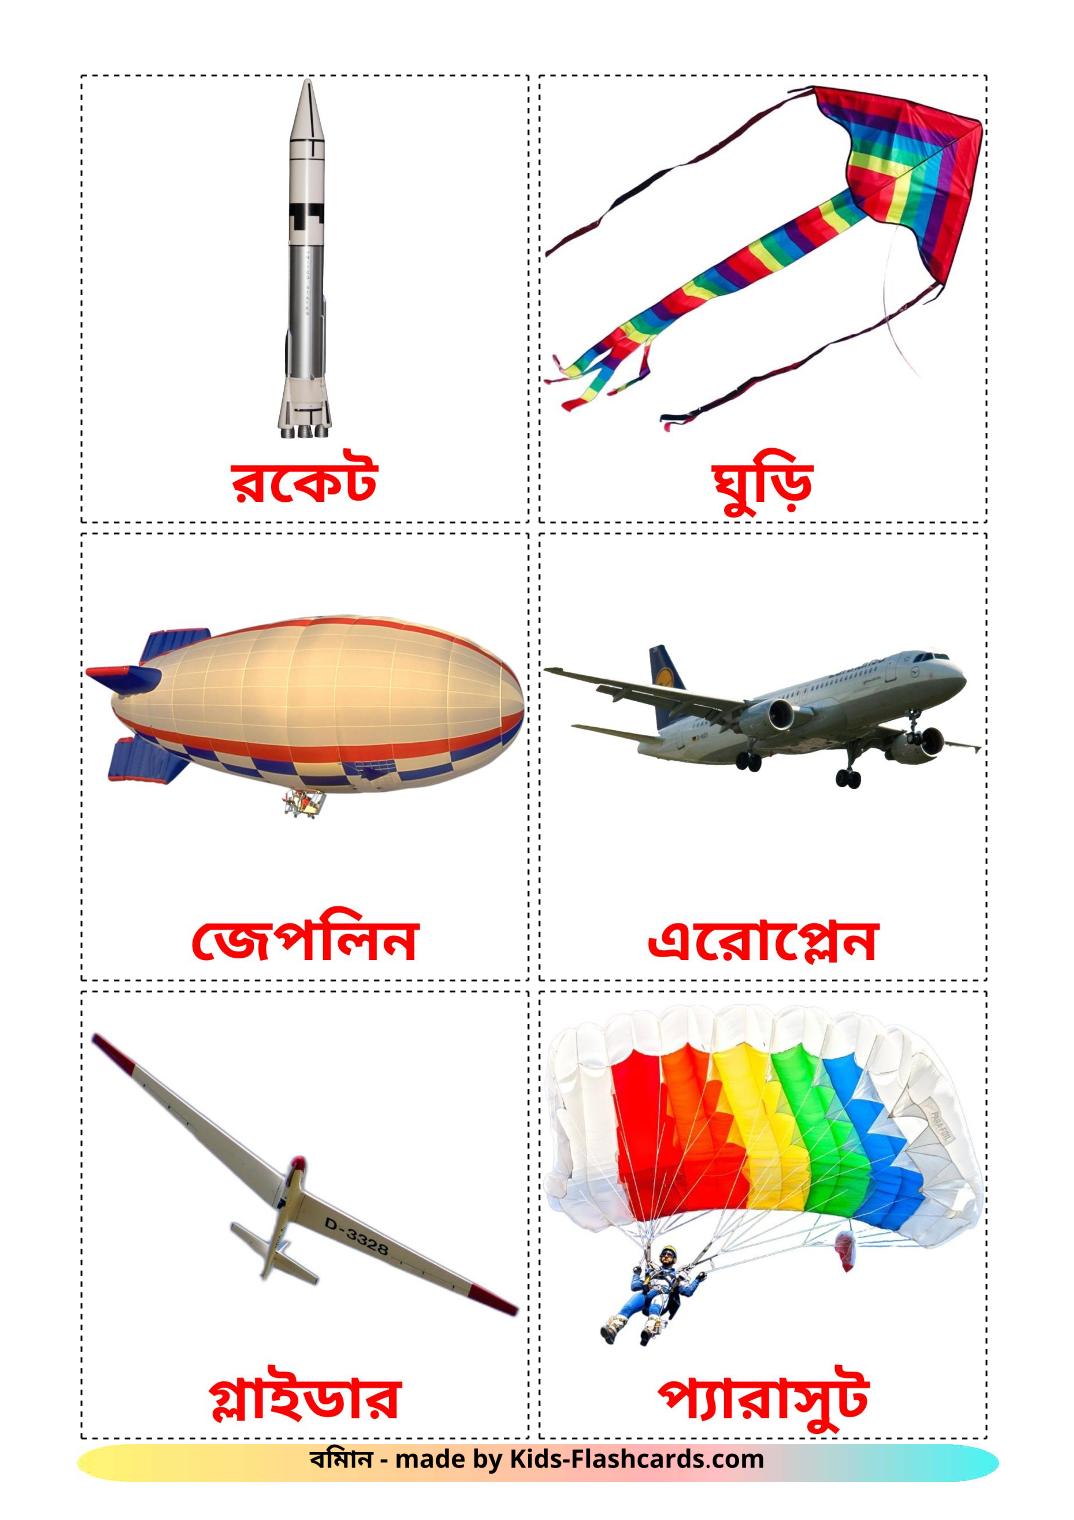 Transporte aéreo - 14 fichas de bengalí para imprimir gratis 